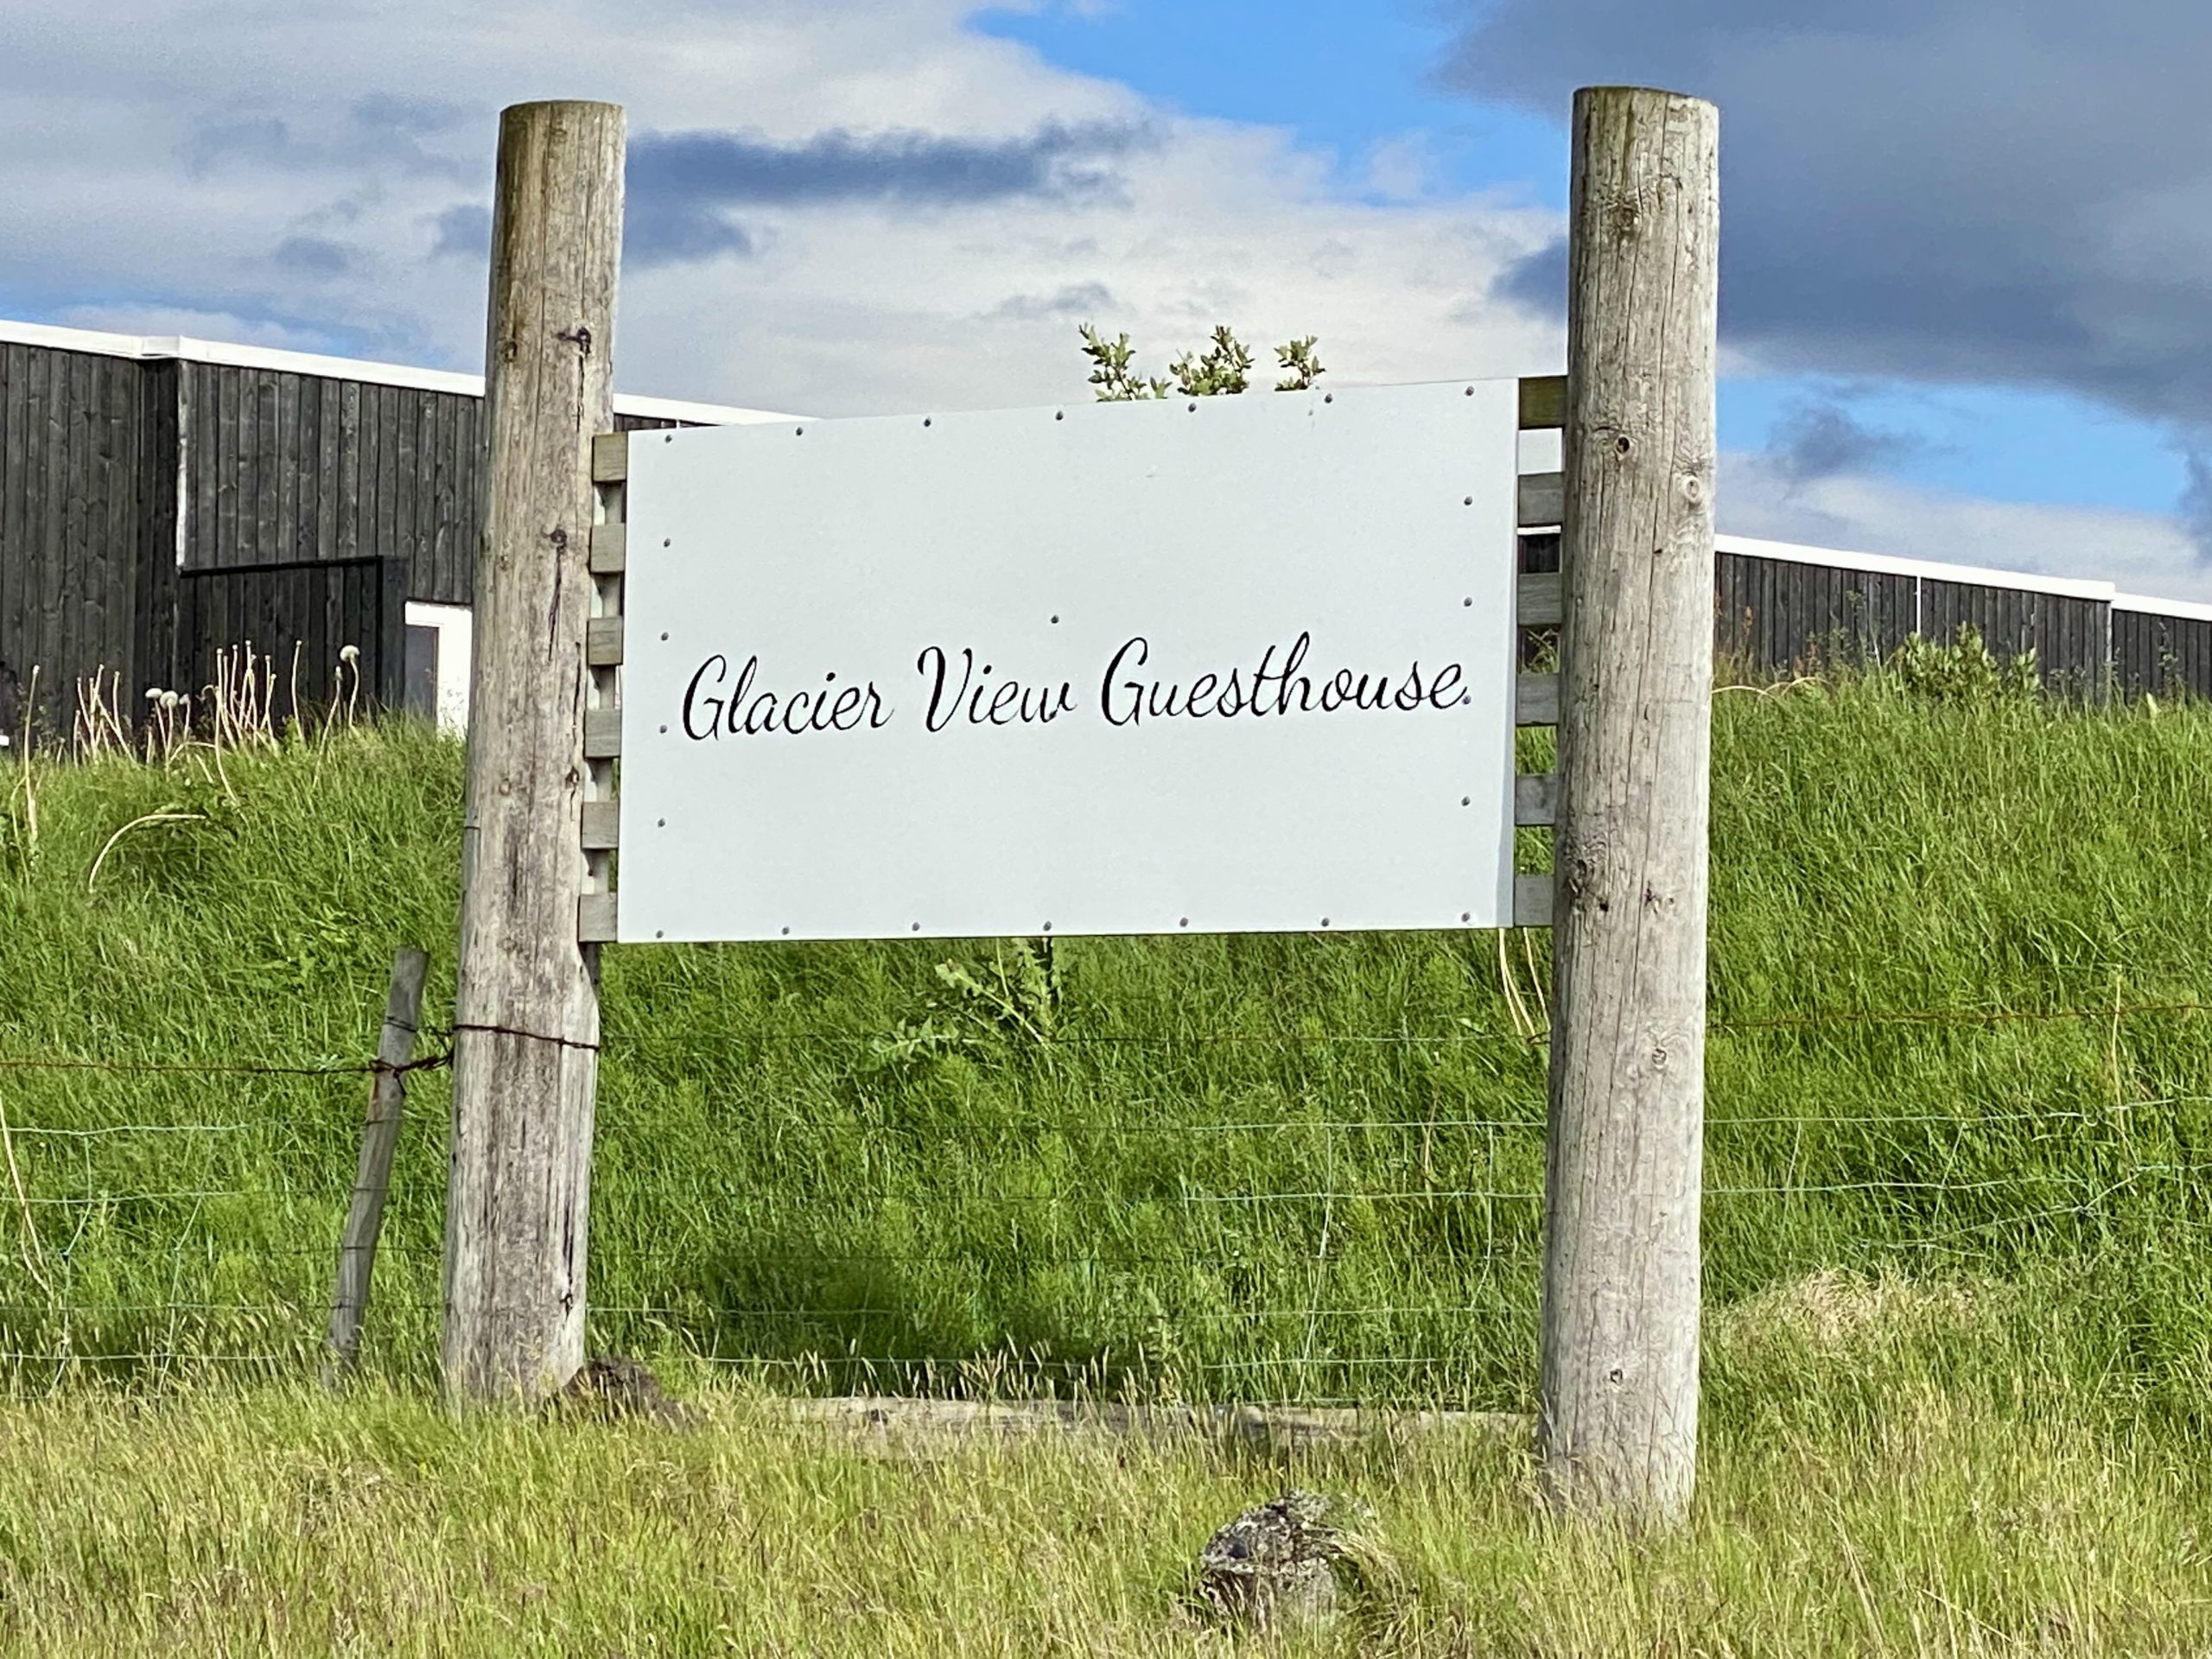 a sign in a grassy field